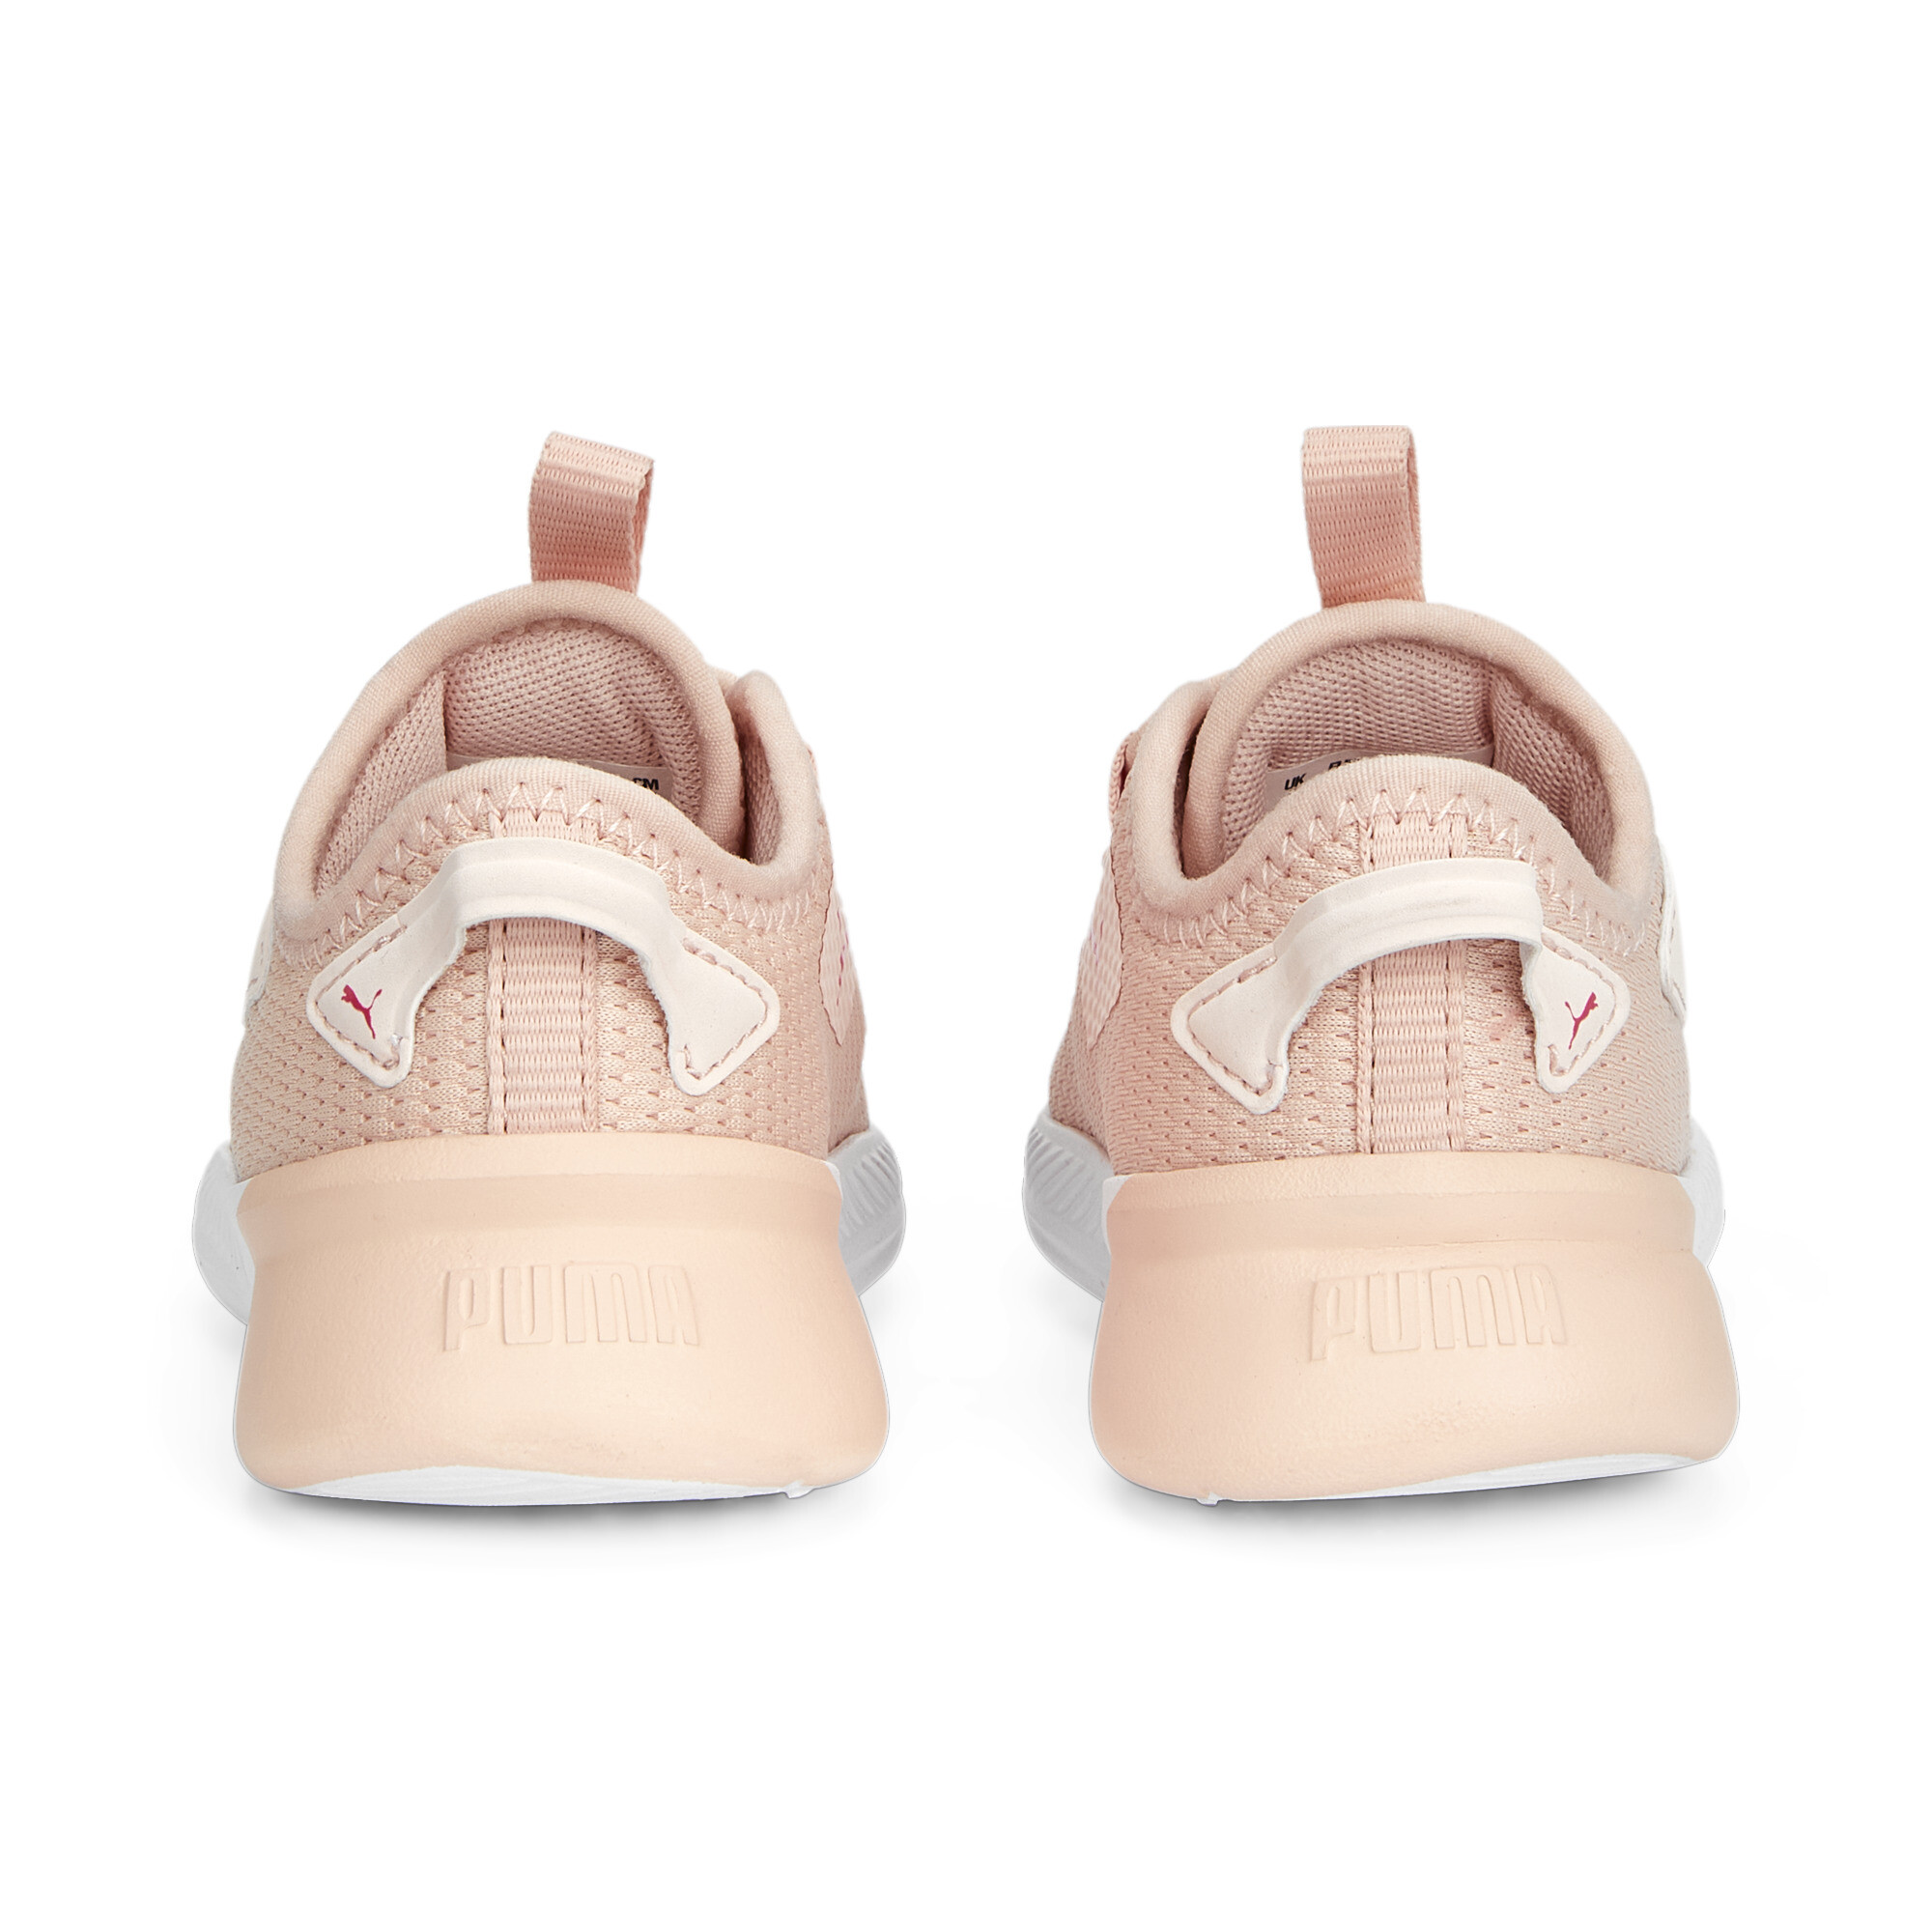 Puma Retaliate 2 AC Sneakers Babies, Pink, Size 27, Shoes